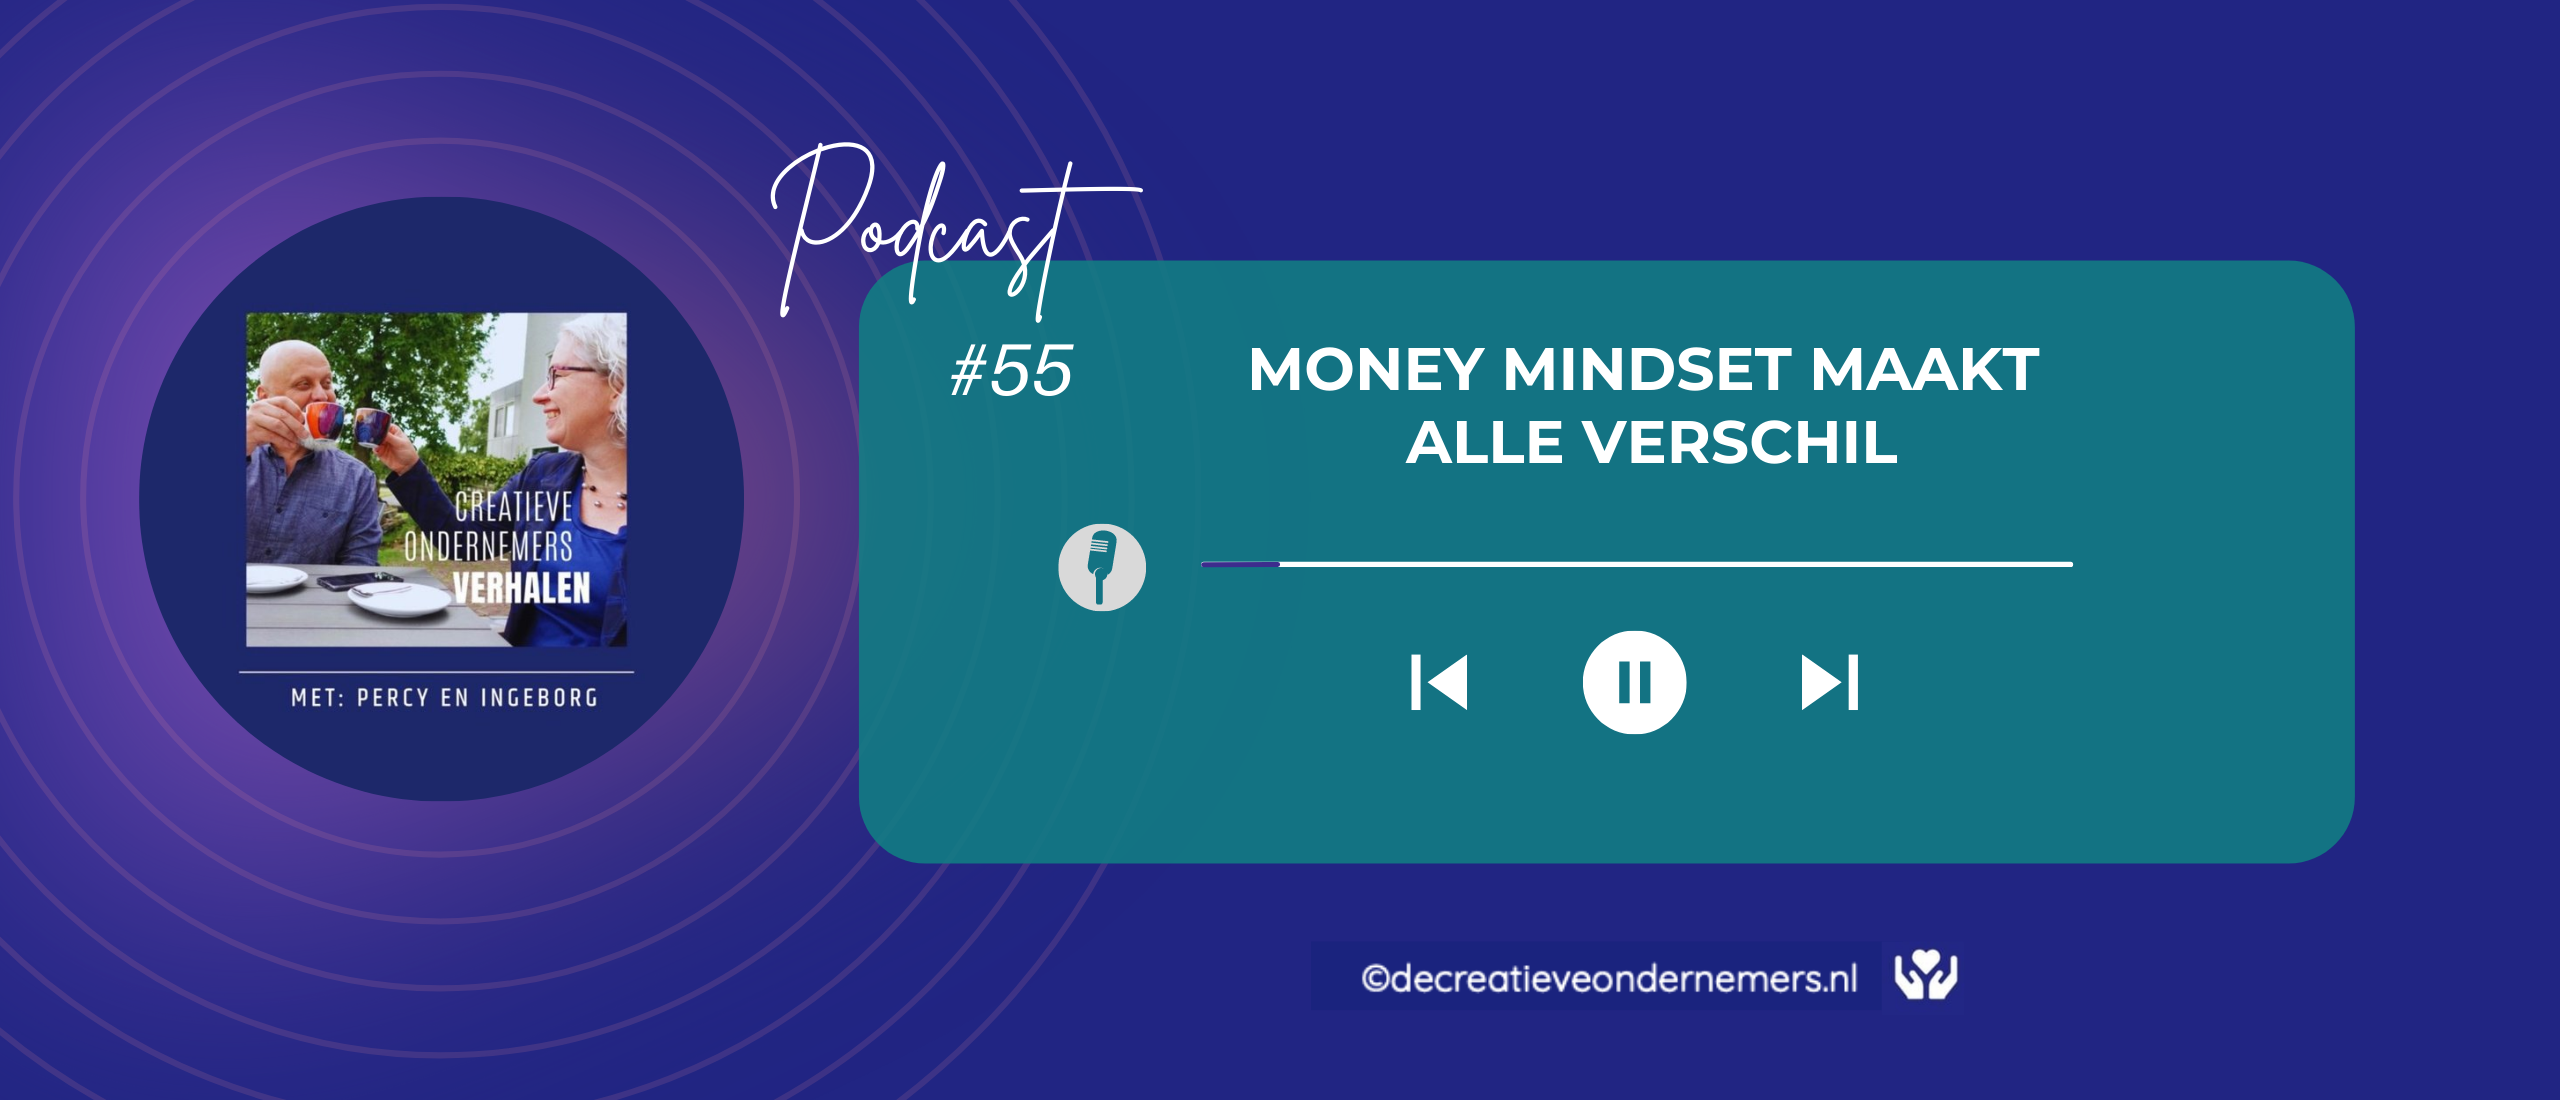 #55 Money mindset maakt alle verschil